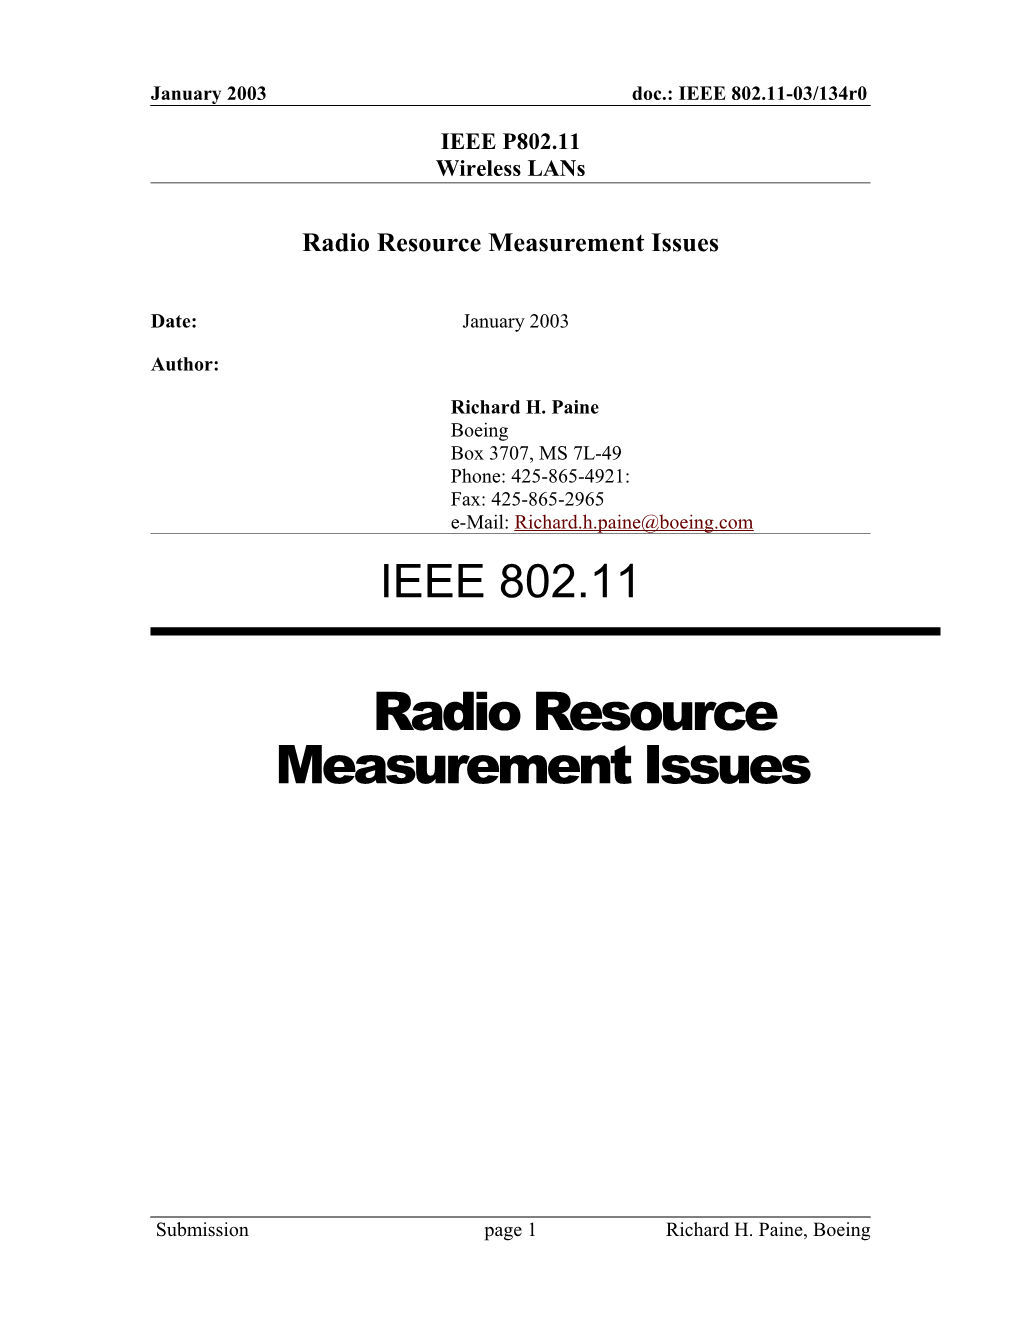 Radio Resource Measurement Issues